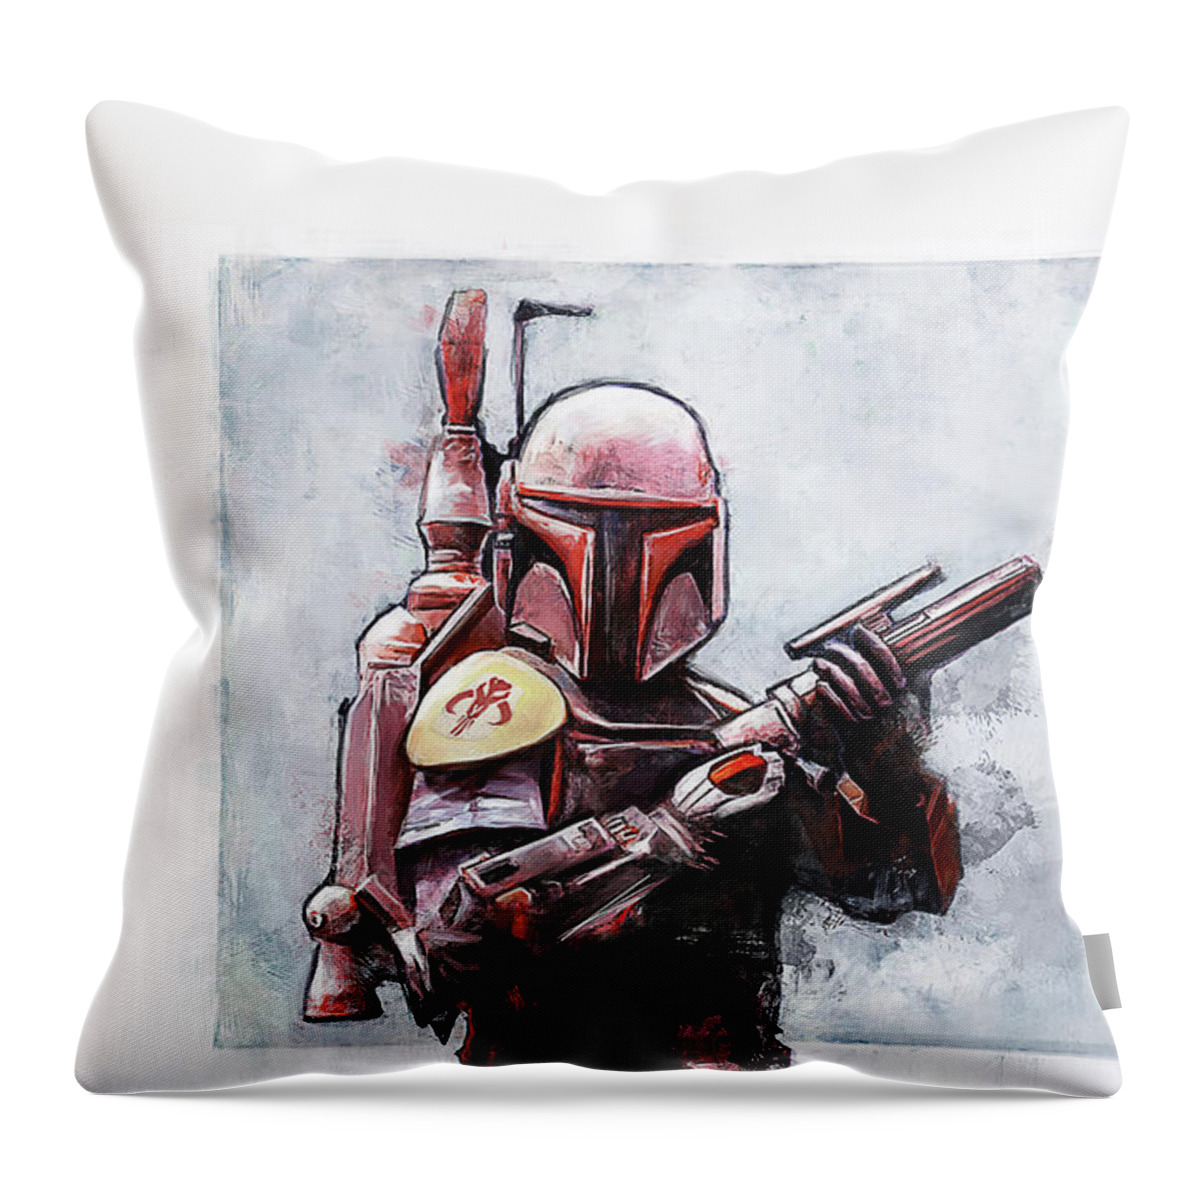 Boba Fett The Bounty Hunter - Star Wars Throw Pillow by Joseph Oland -  Pixels